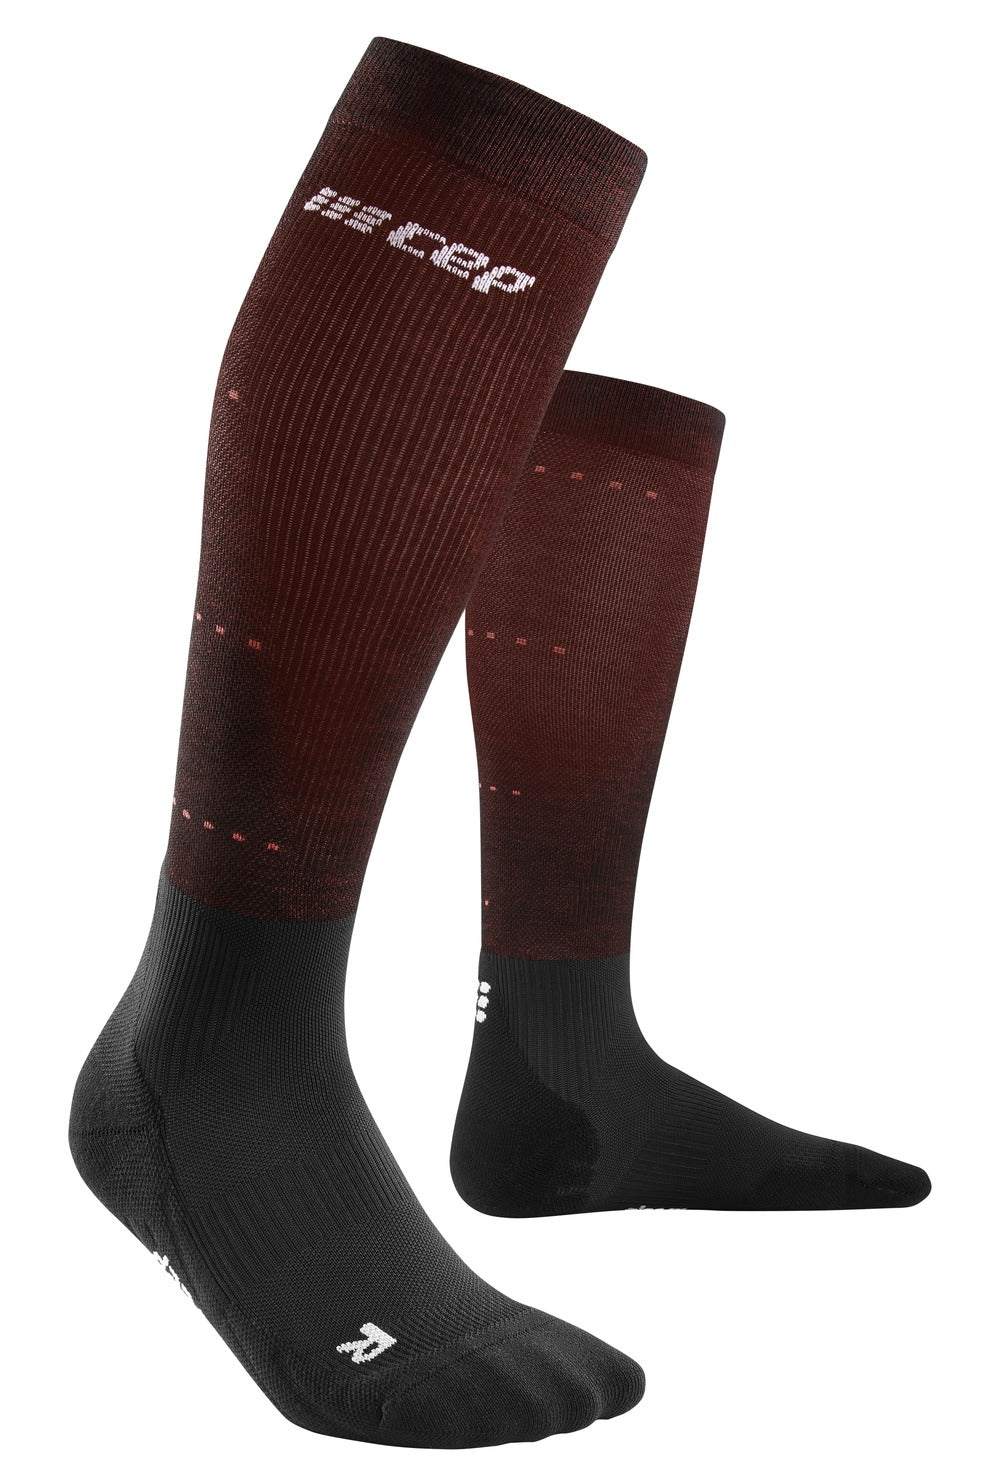 CEP Infrared Compression Sock Compression Care Red Black Knee-high